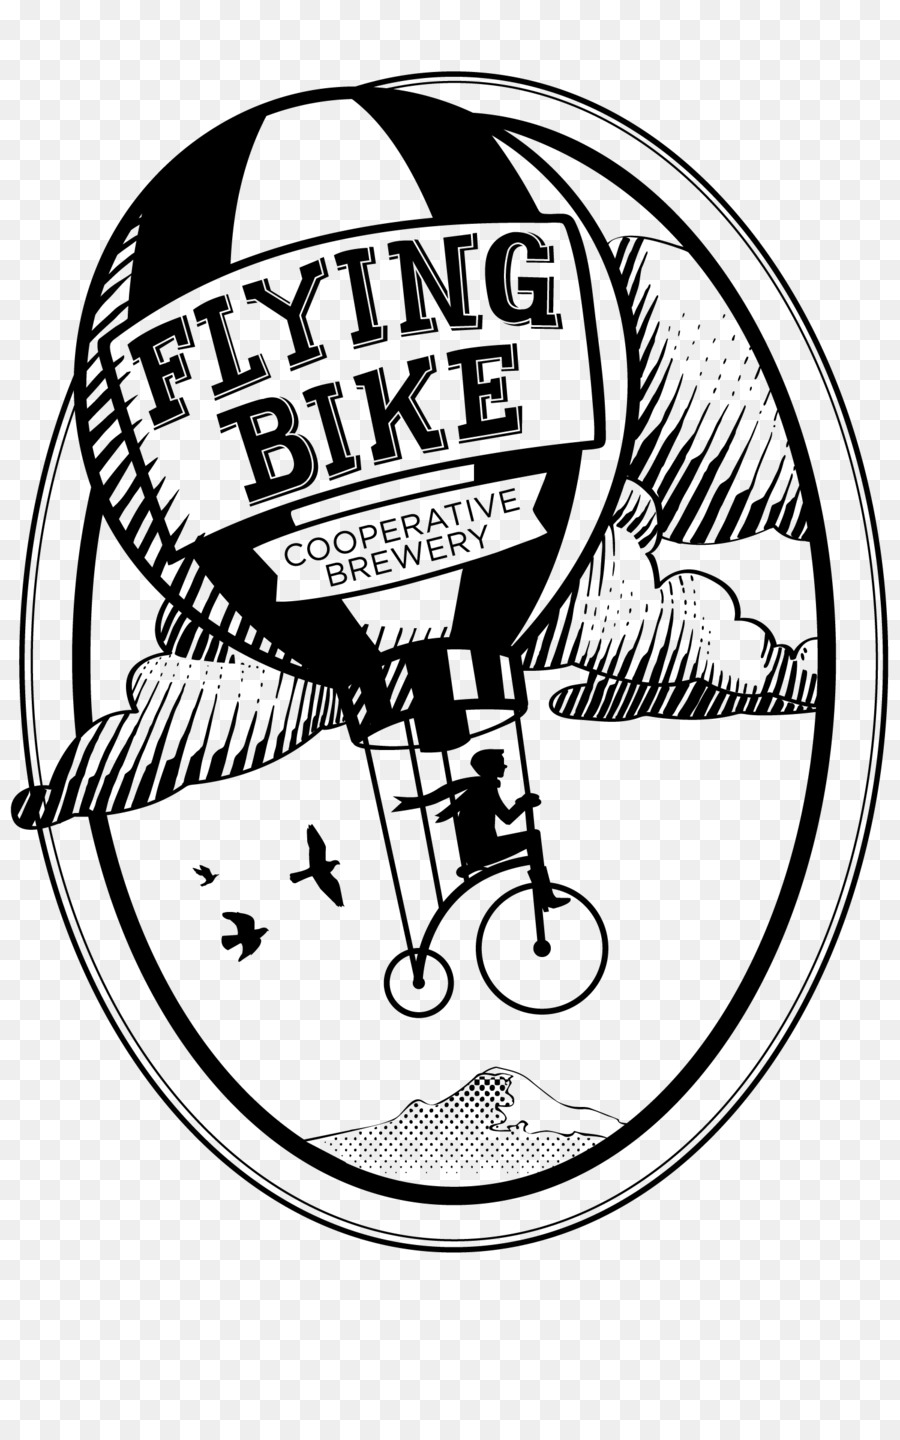 Flying Bike Genossenschaft Brauerei Bier India pale ale - Bier